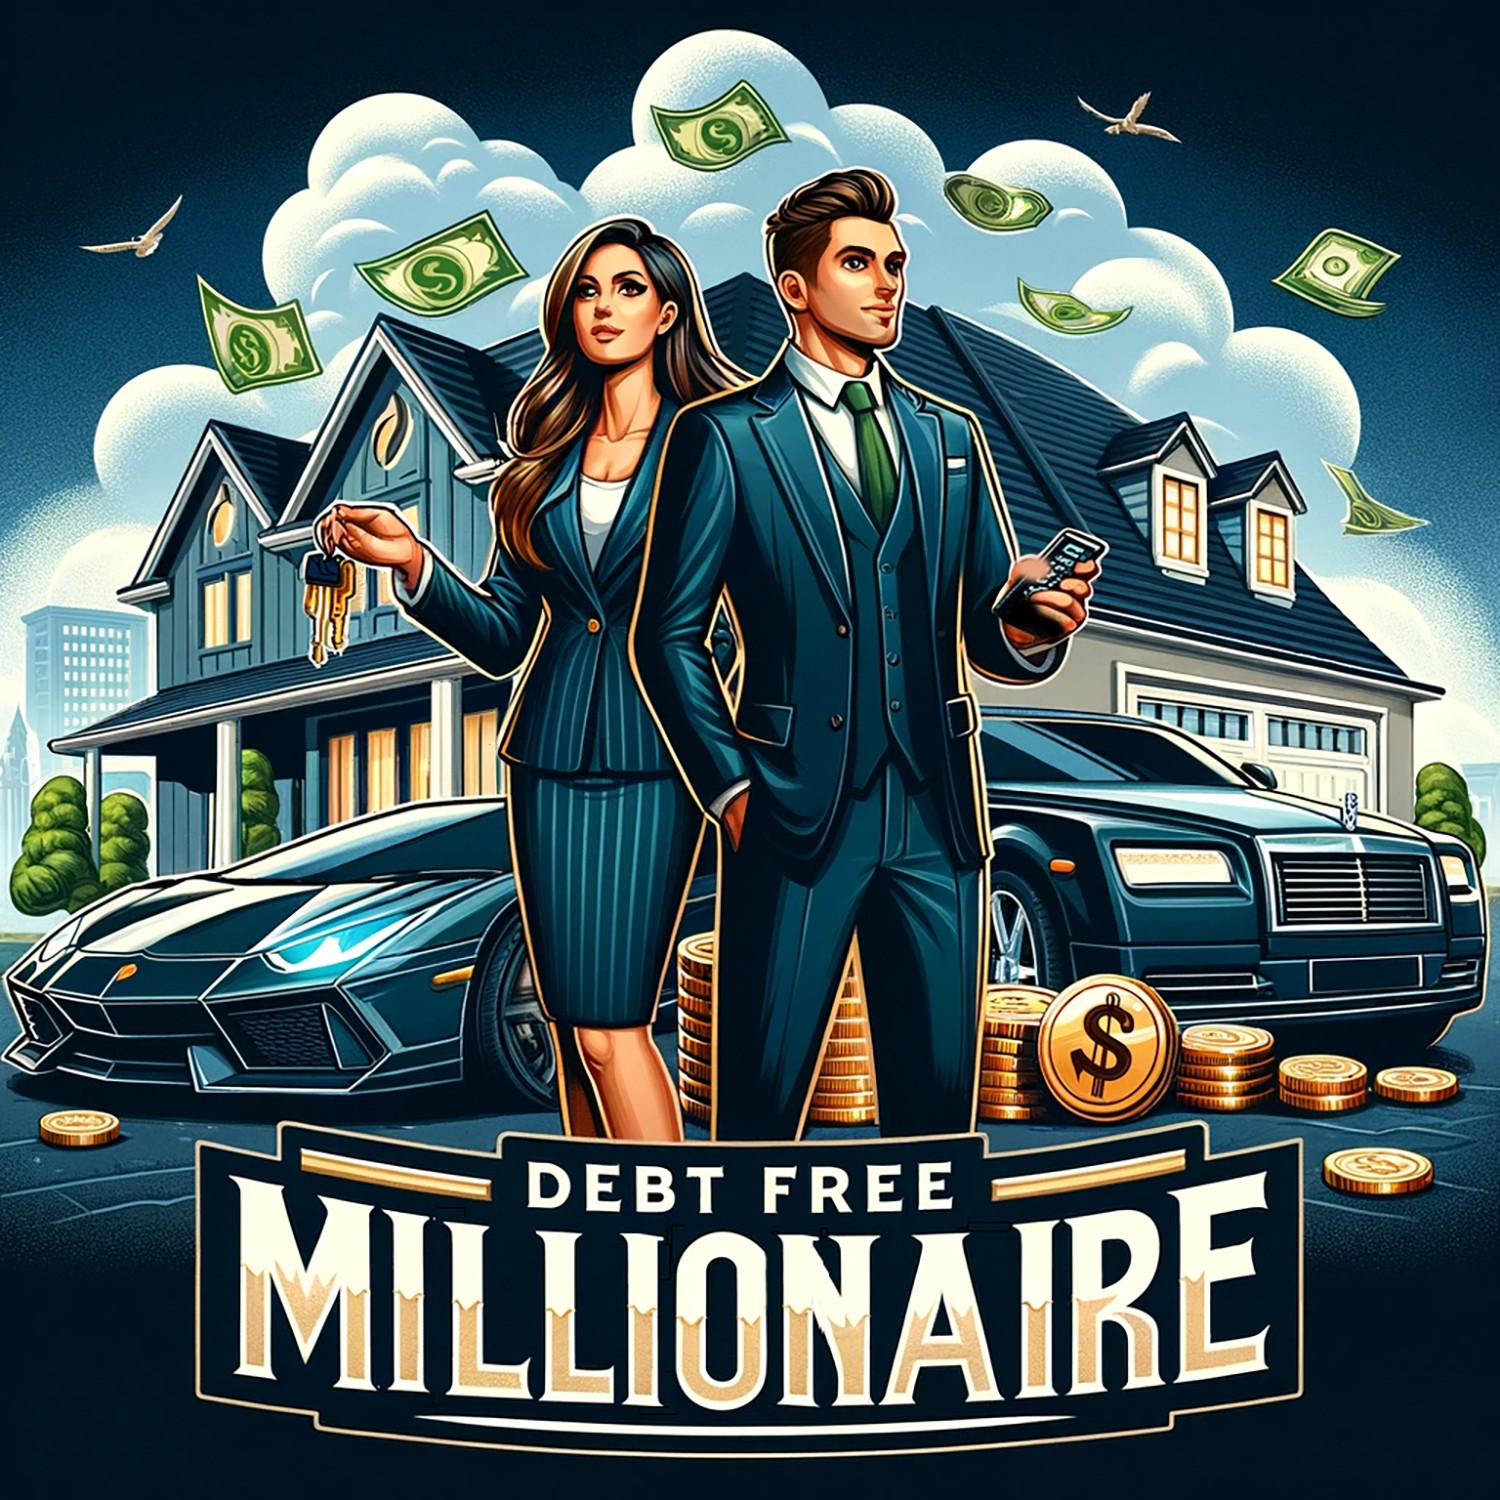 Debt-Free Millionaire